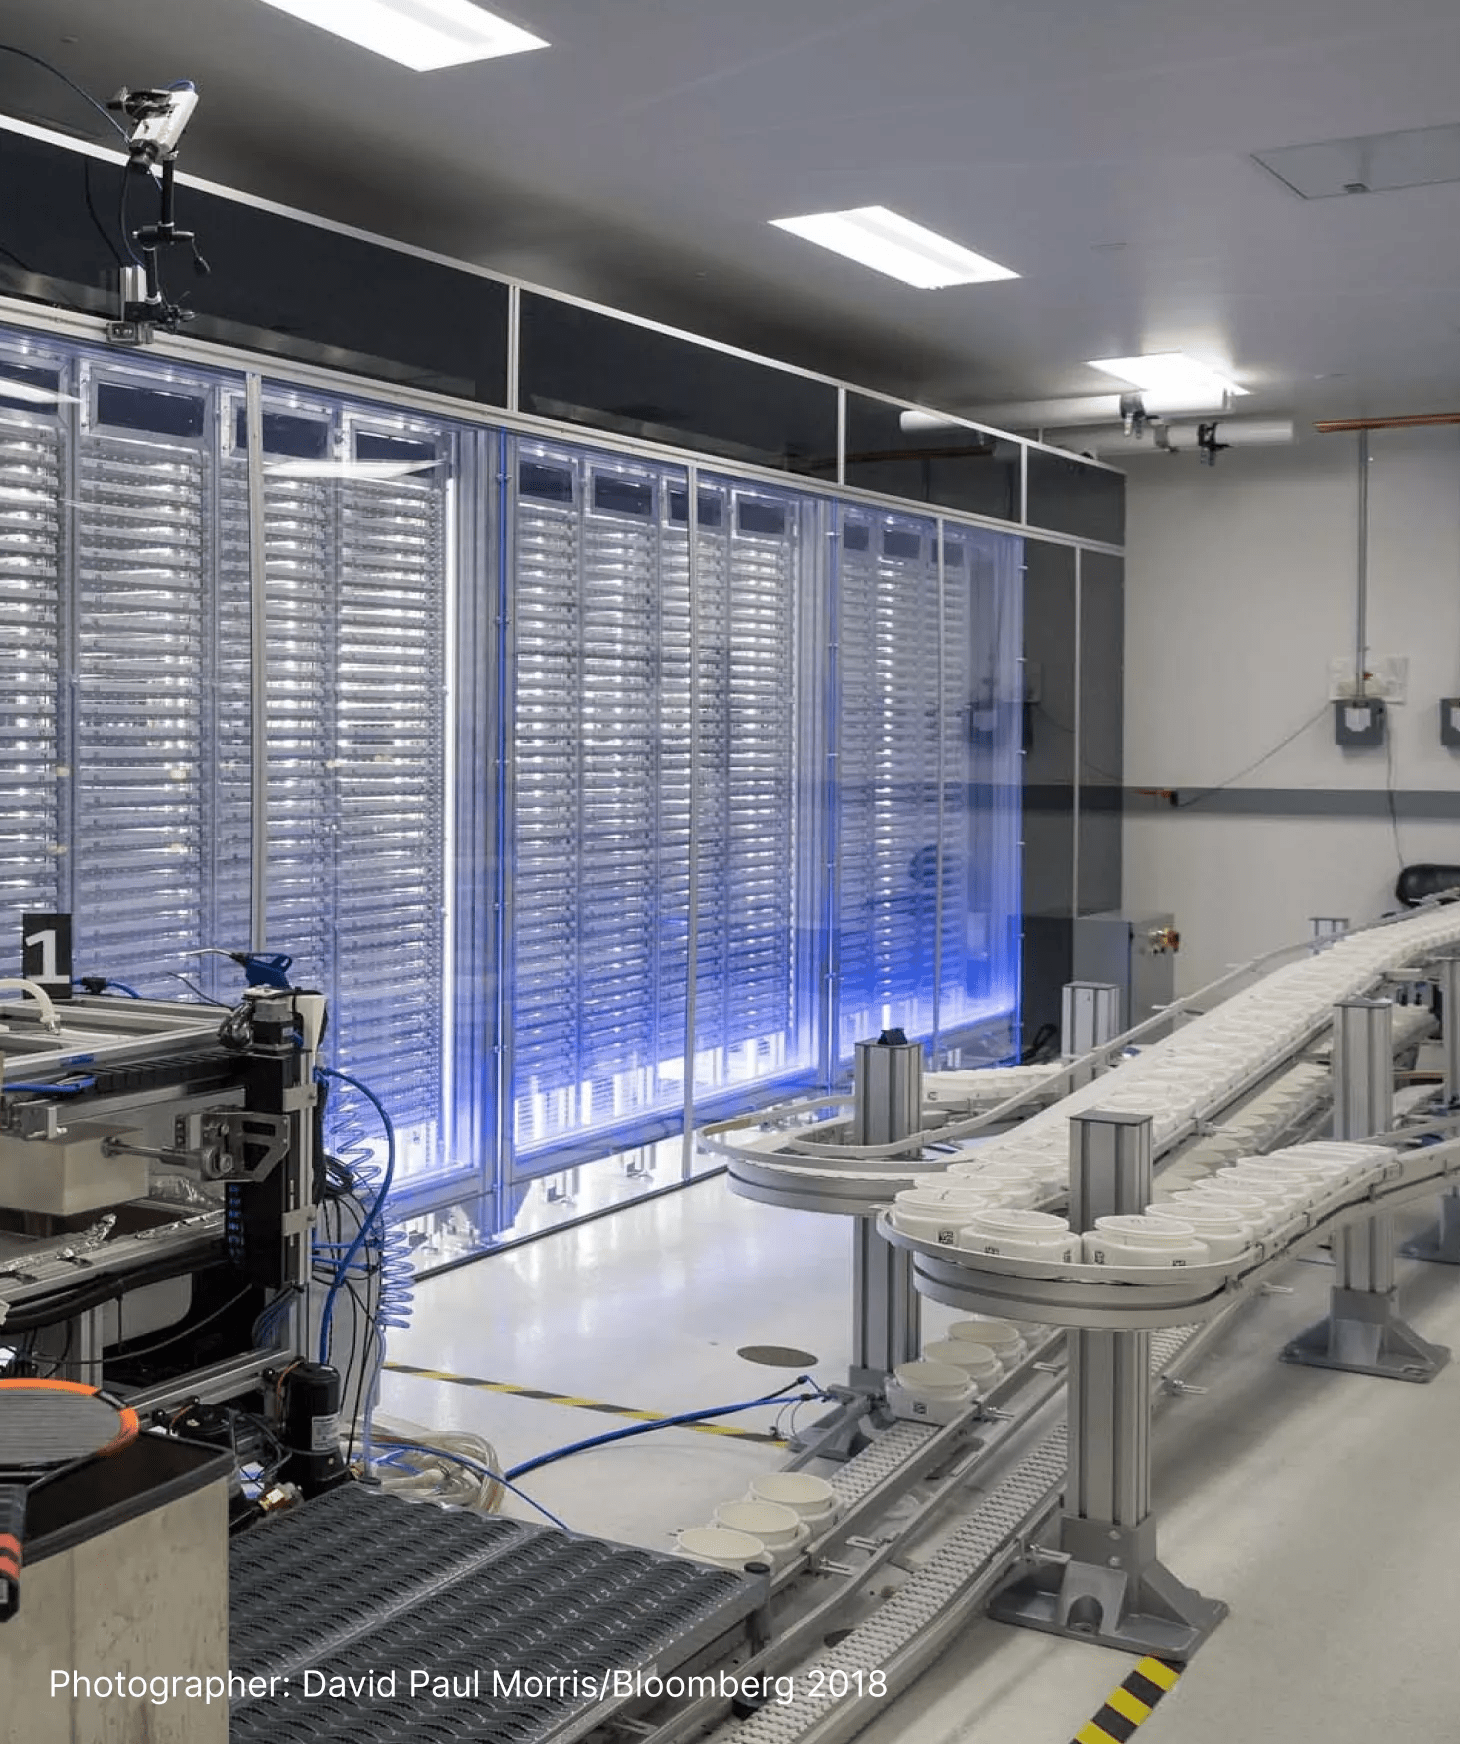 Inside the Debug mosquito lab